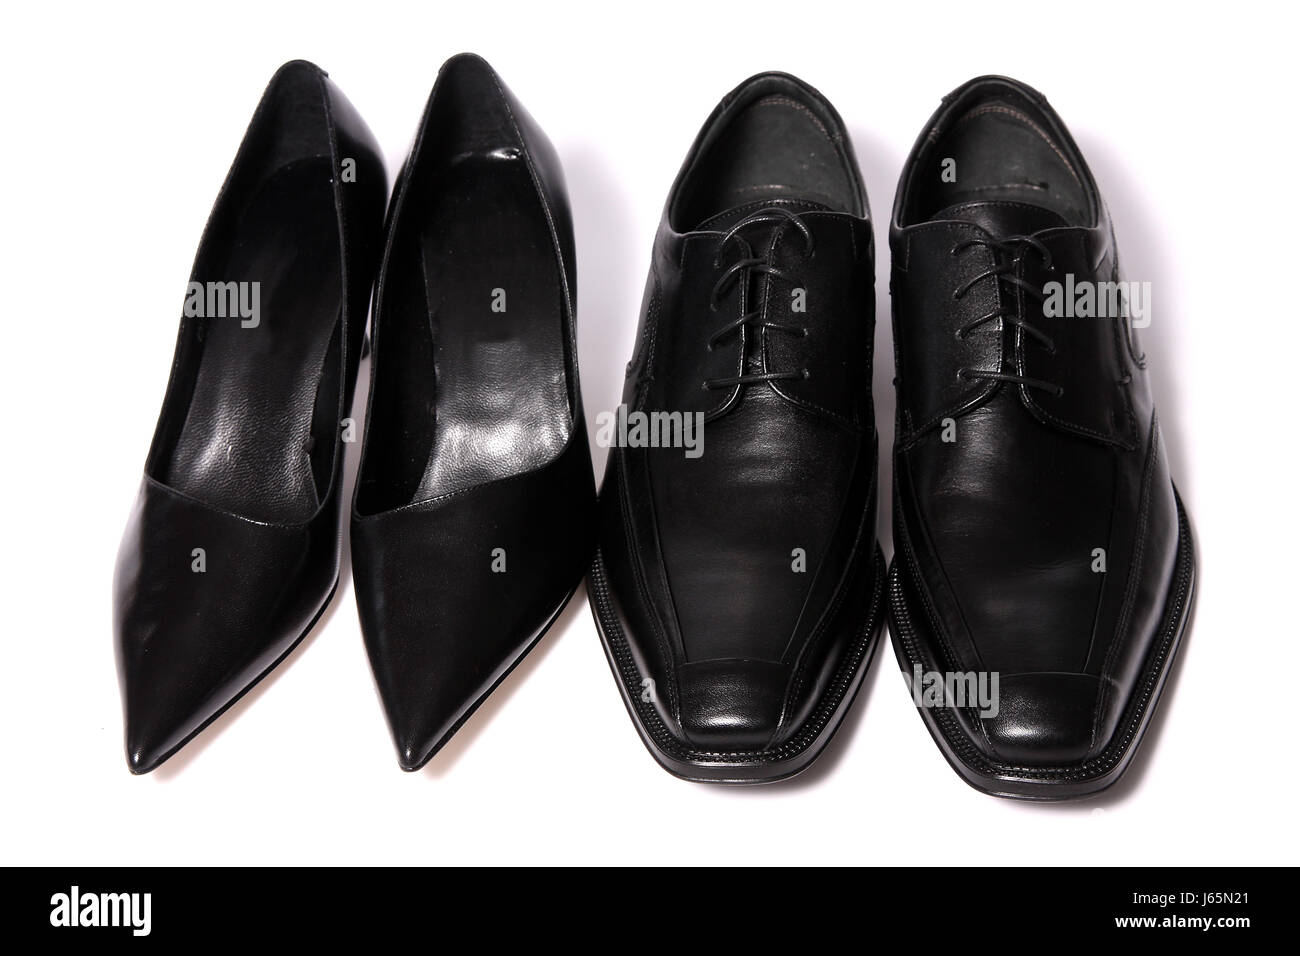 Highheels Schnürsenkel Pumpen Heels schwarze dunkelhäutige kohlschwarze tief schwarze Schuhe Leder Stockfoto